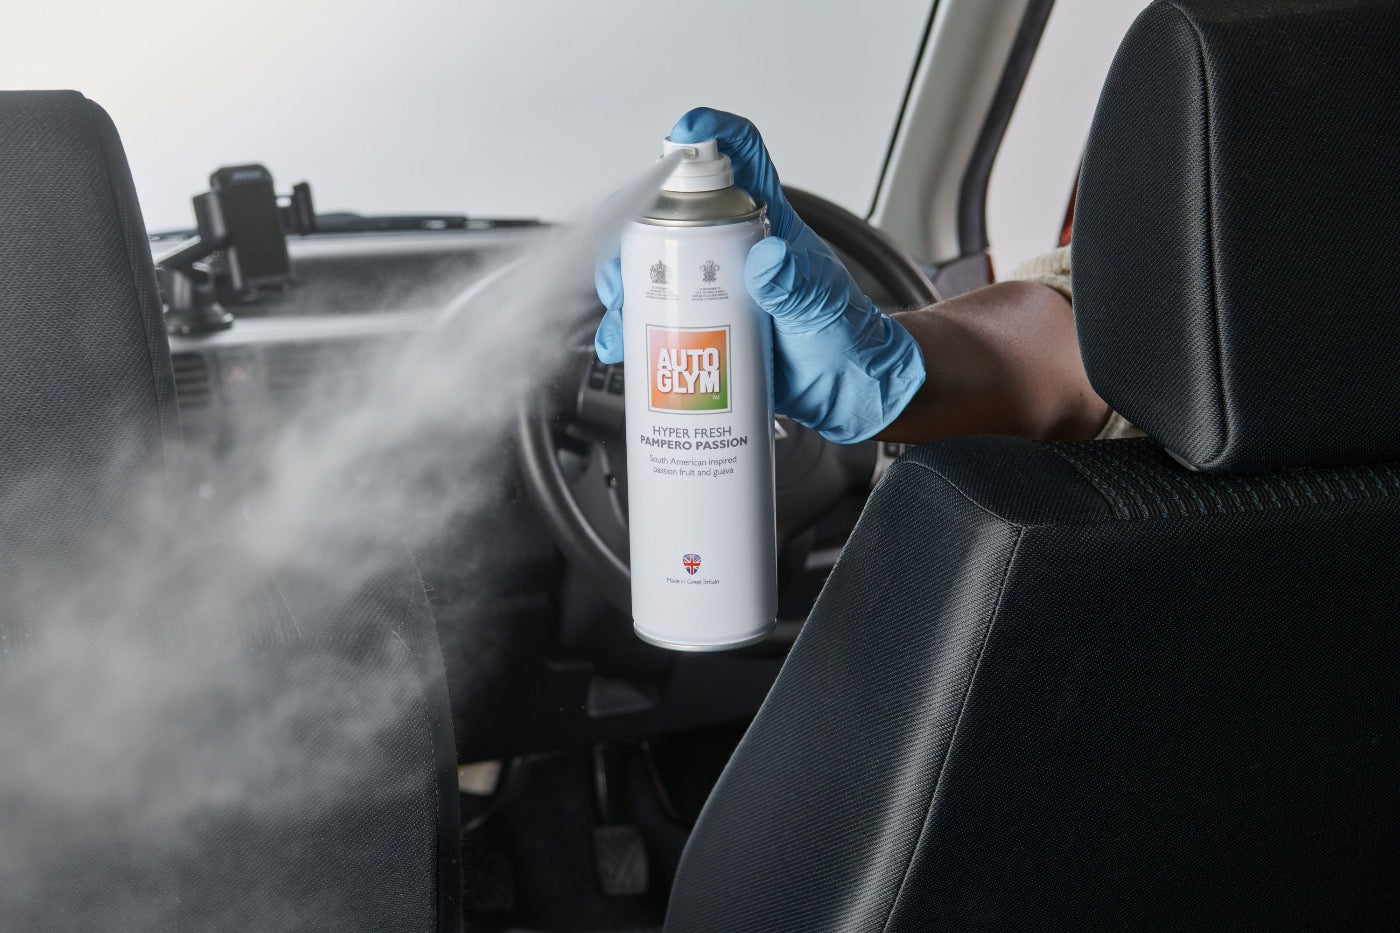 Best smelling interior car. Pampero Passion. Autoglym Hyperfresh car spray. New Autoglym air freshener. Hyper fresh pampero Passion. Hyperfresh aerosol. Autoglym. Suzuki Swift